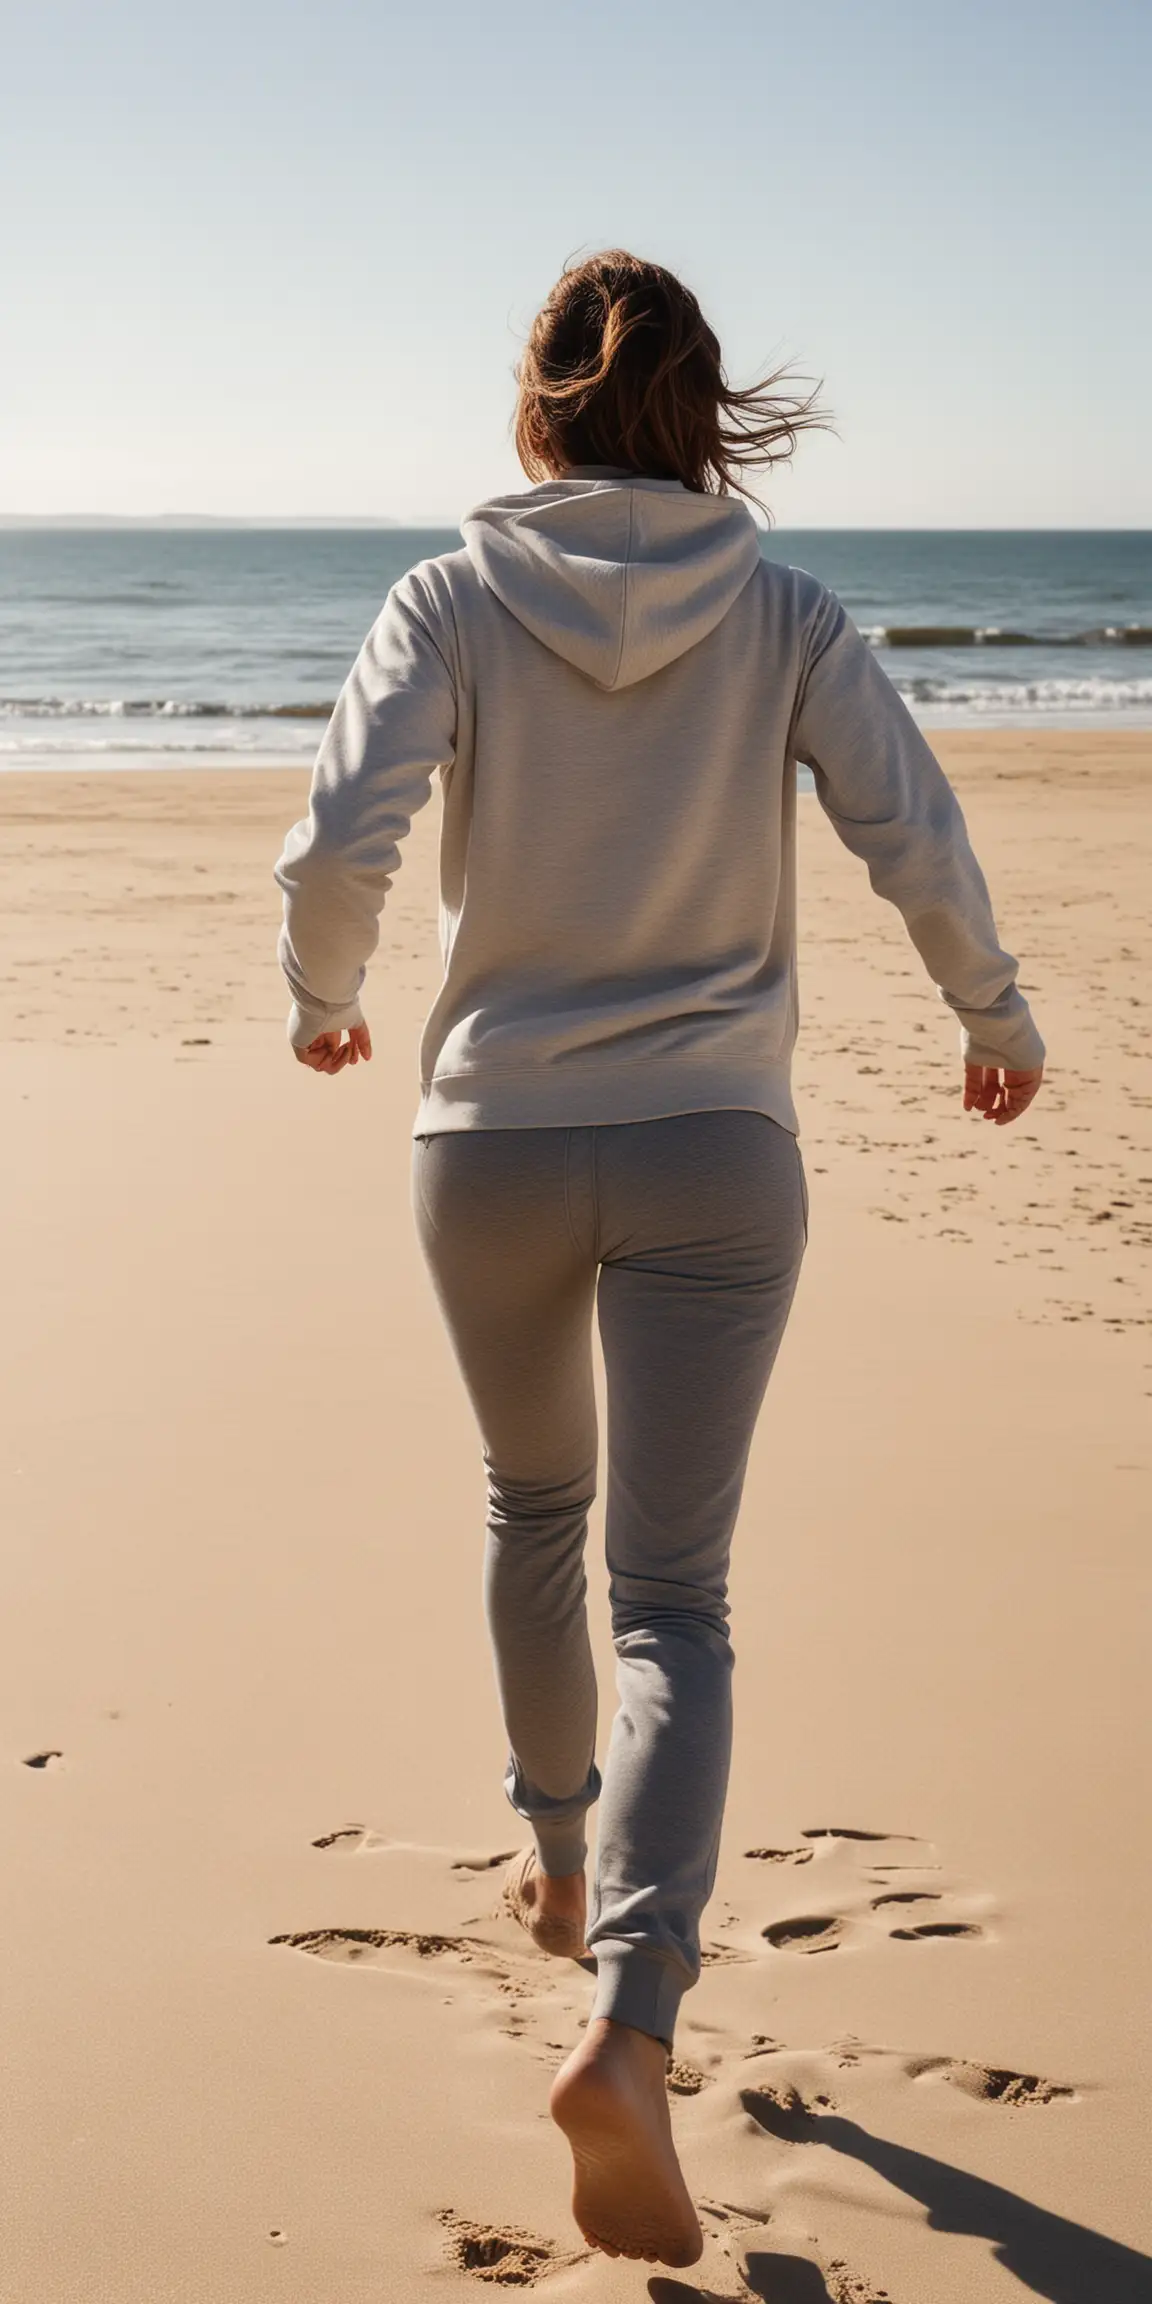 Woman Running on Sunny Beach in Hoodie